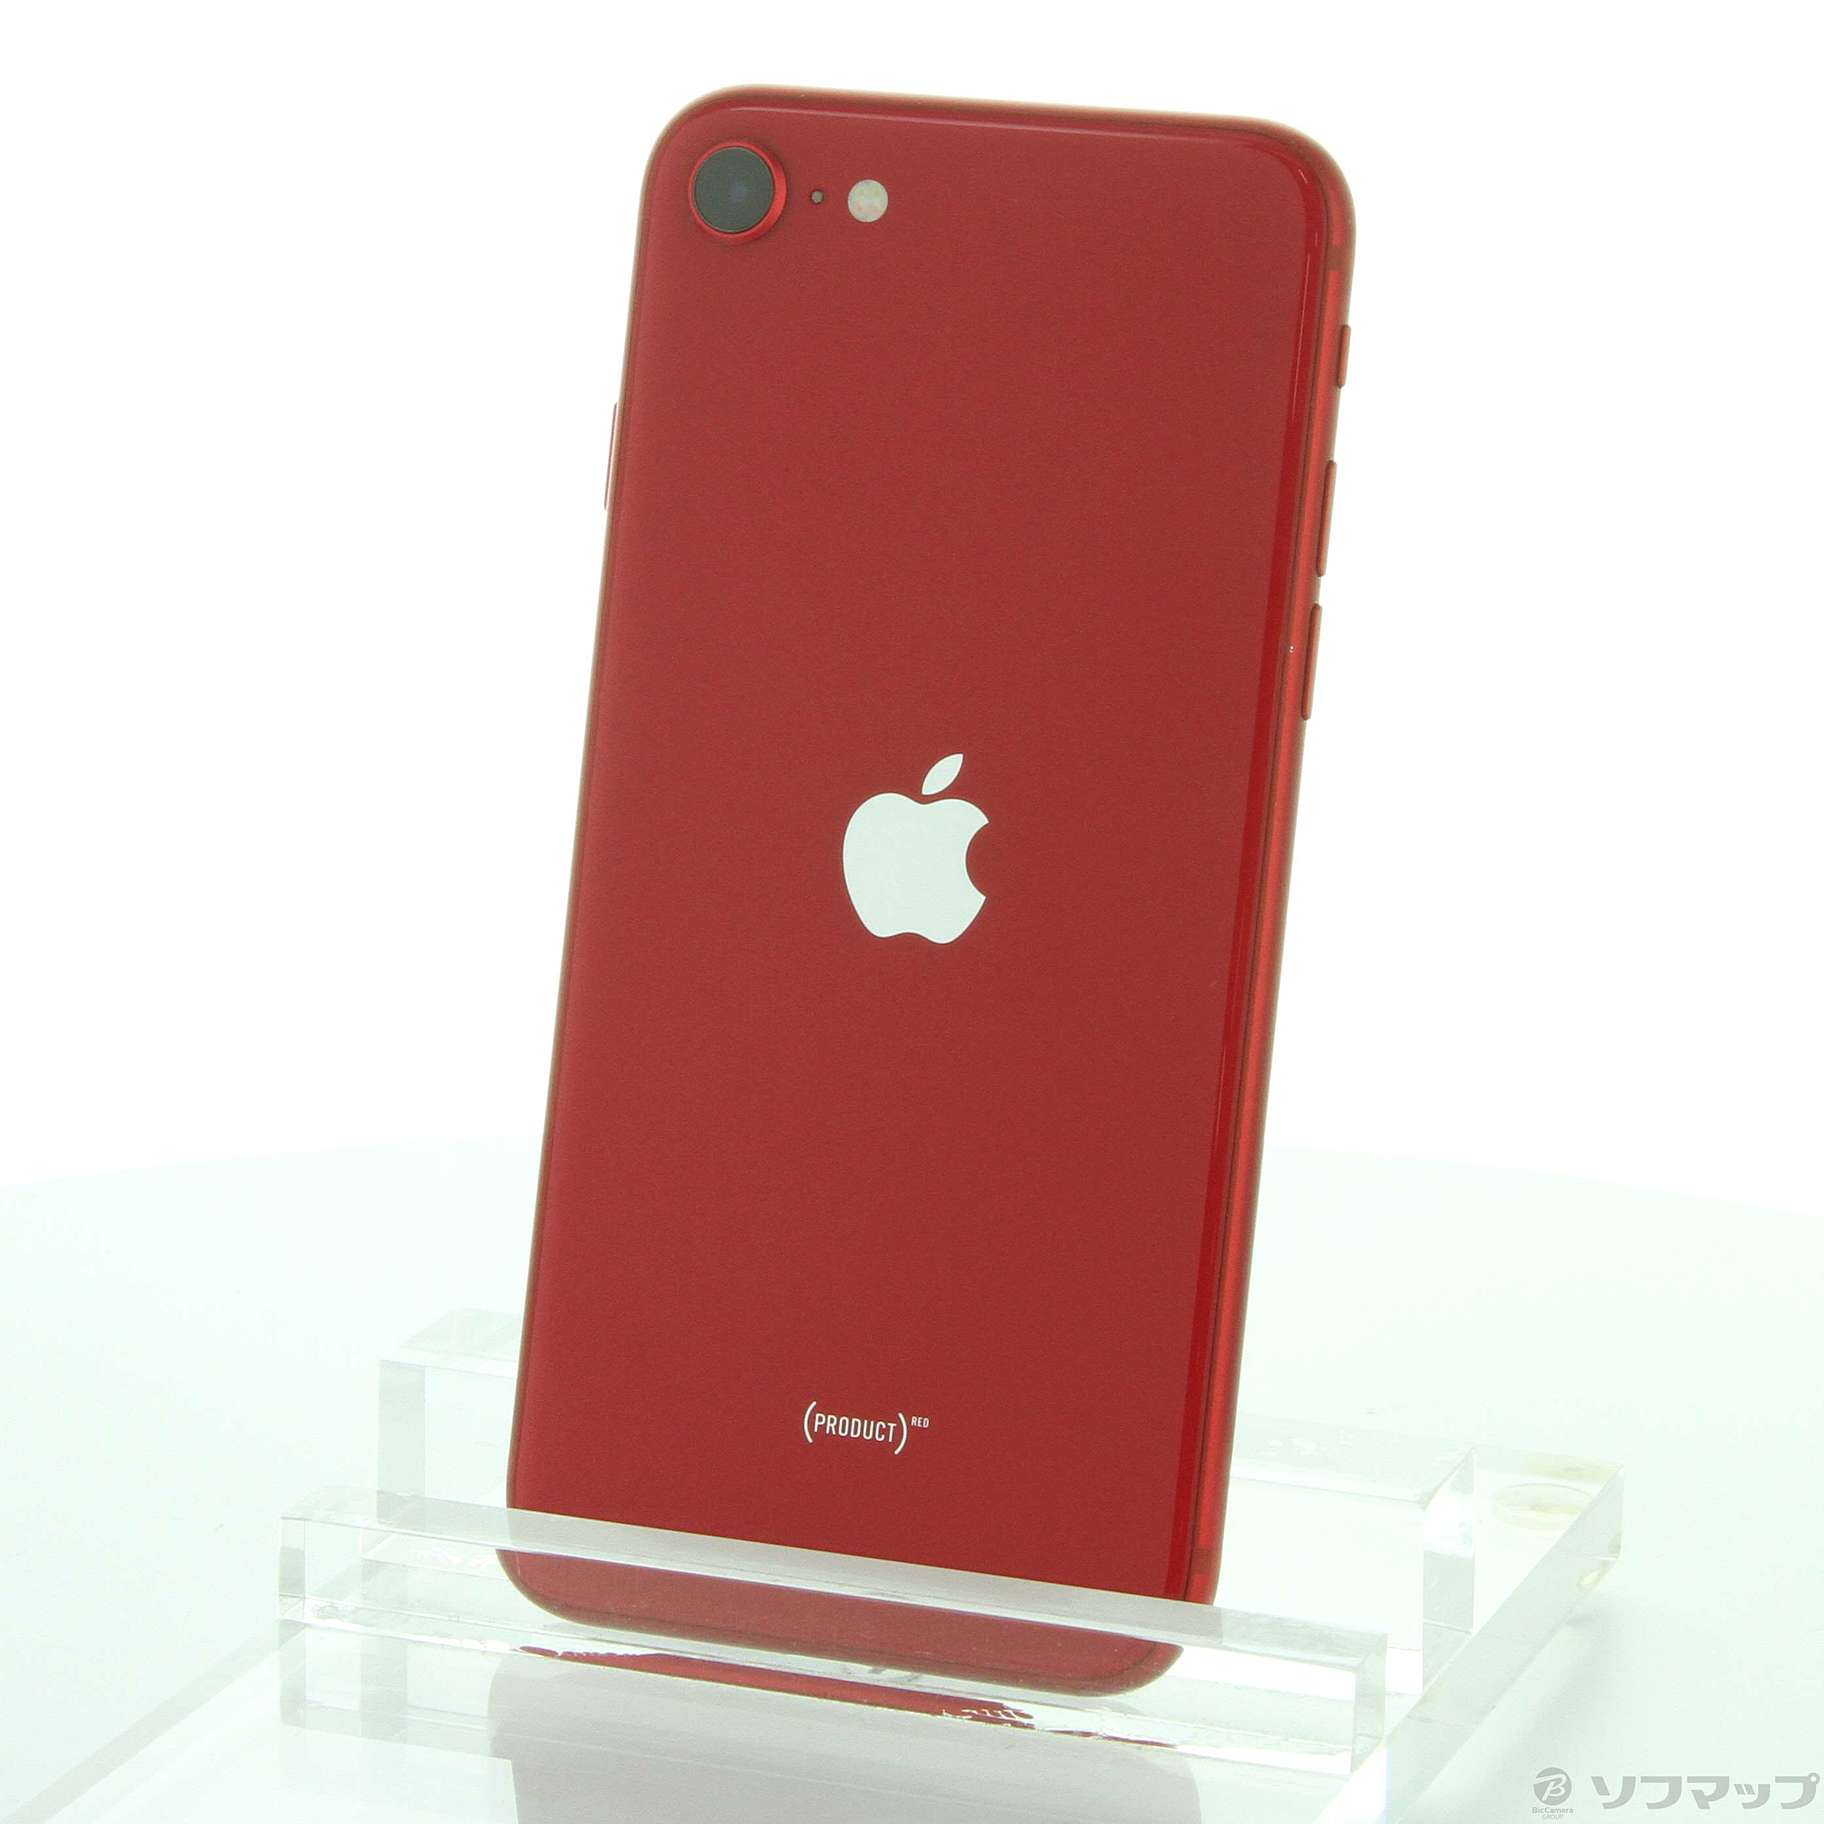 iPhone SE (第2世代) (PRODUCT)RED 128GB SIMフリー [レッド] 中古(白